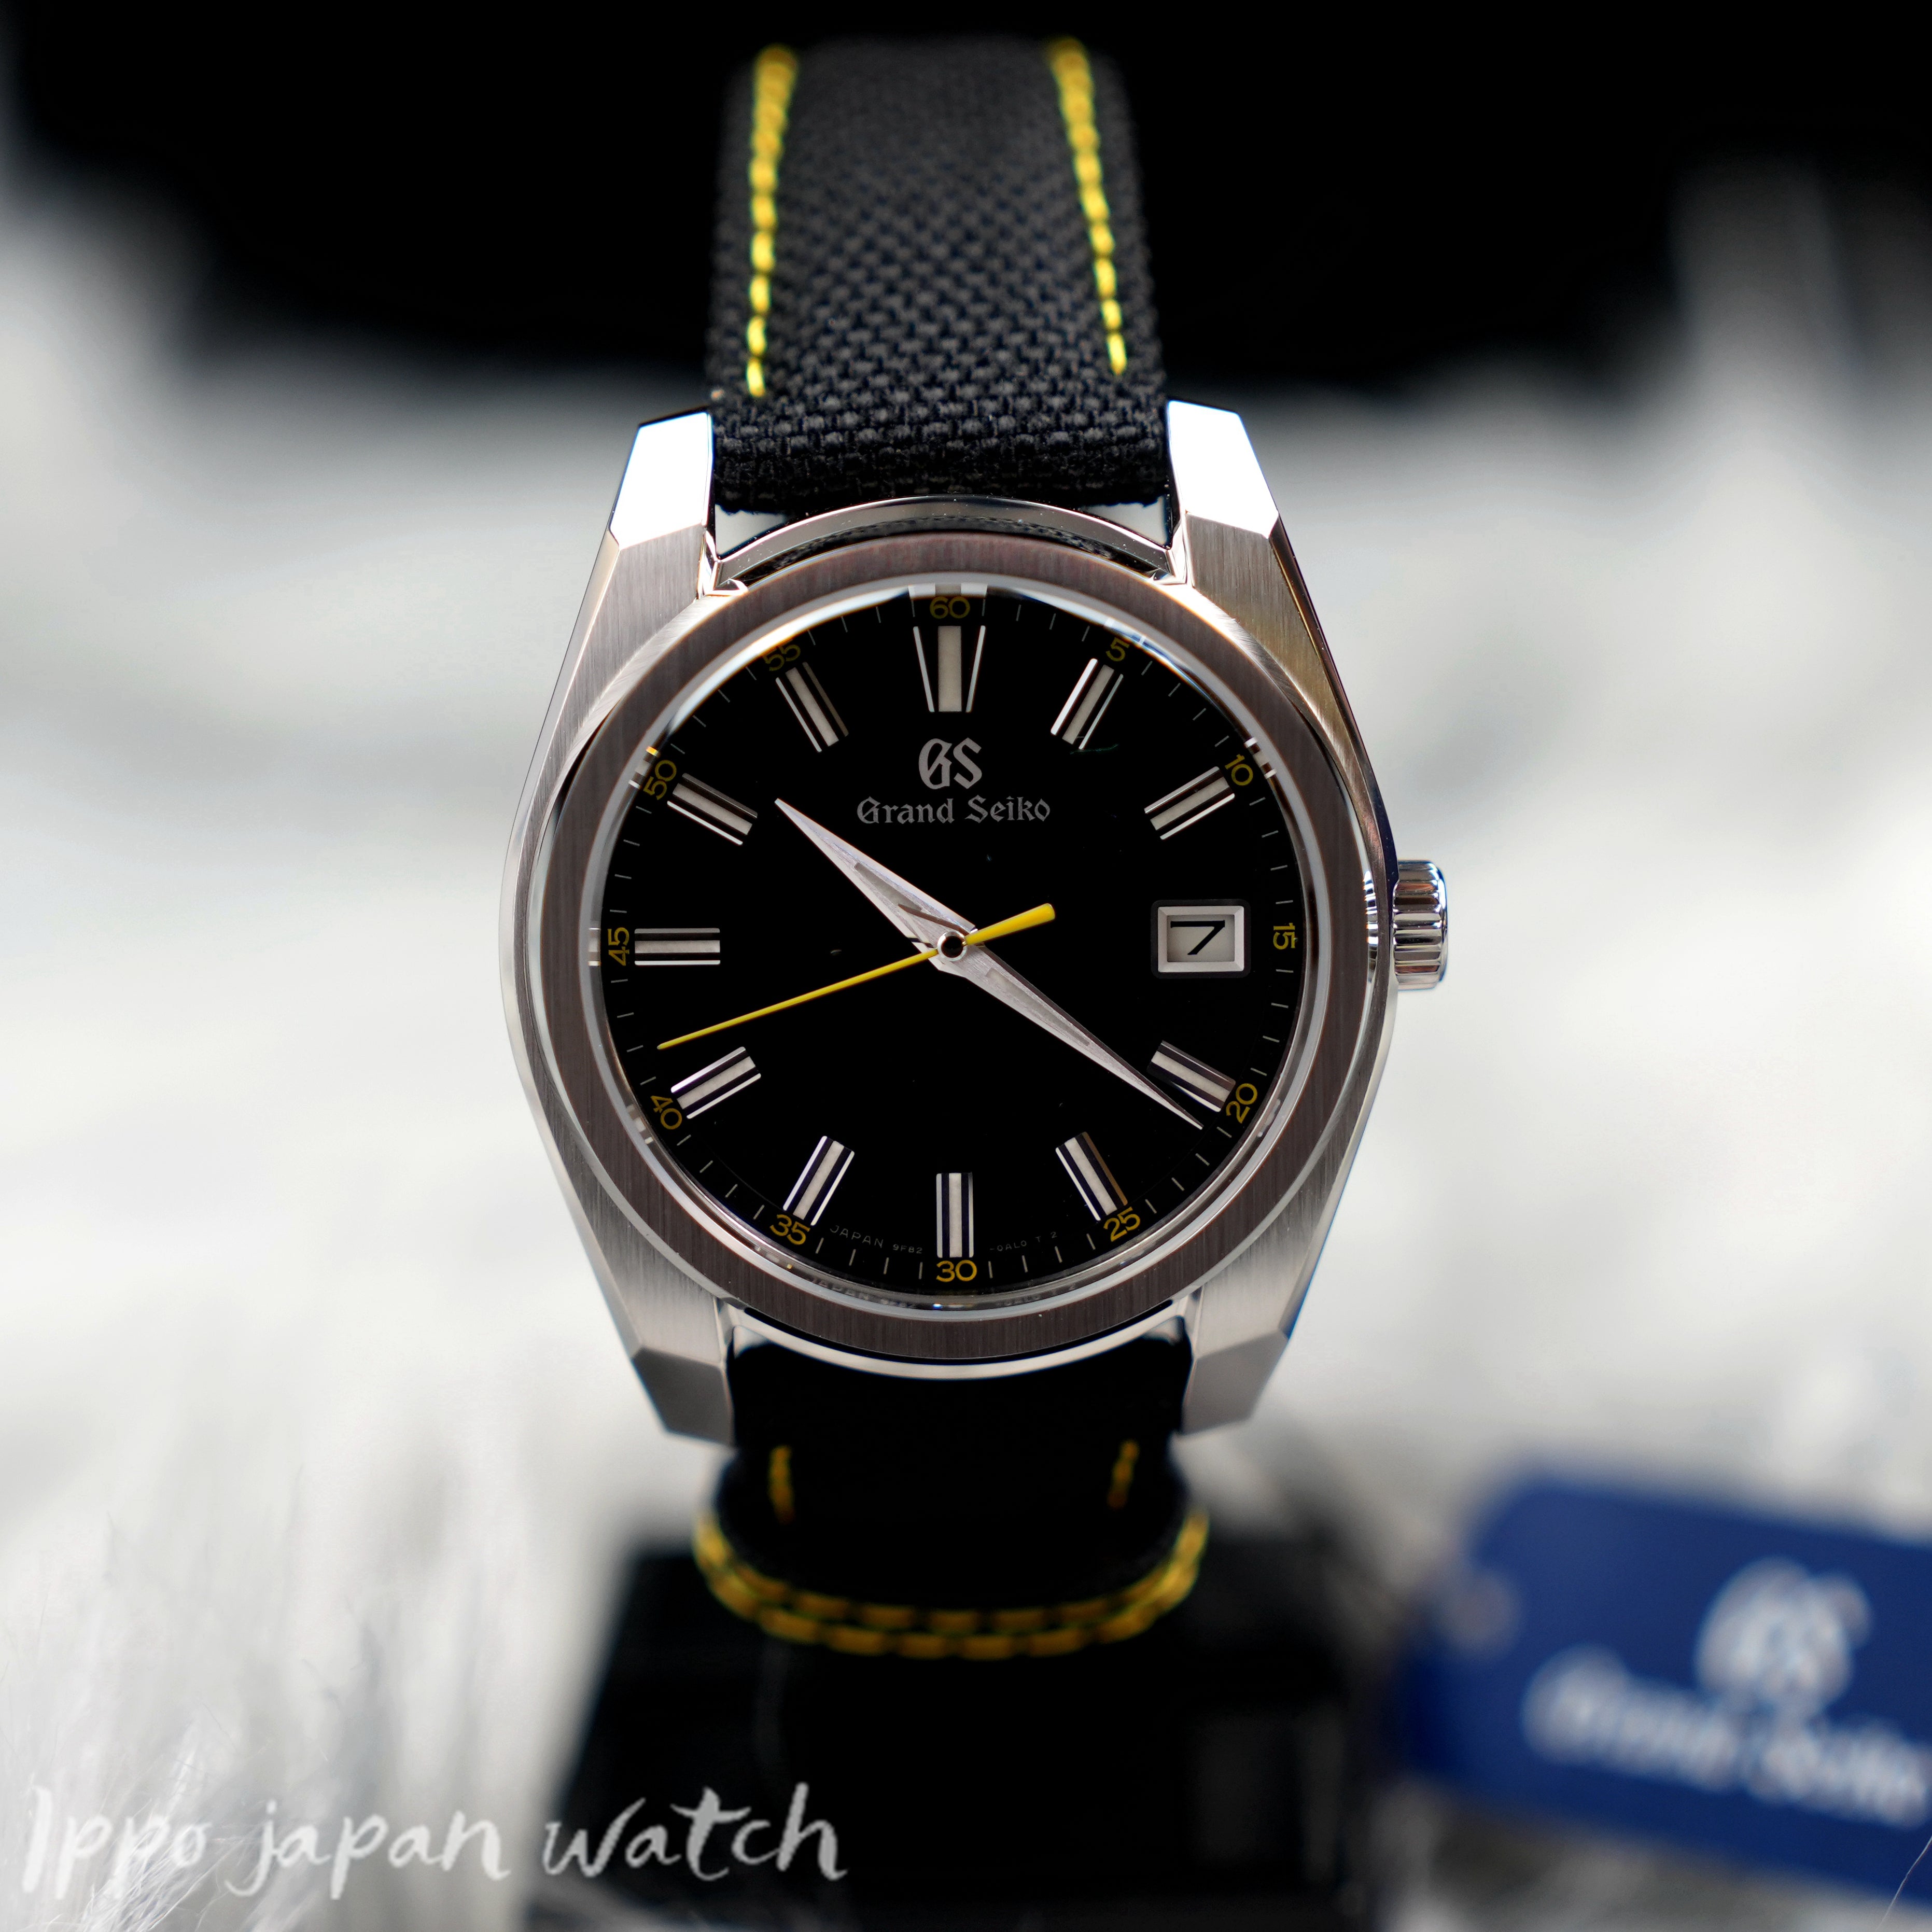 Grand Seiko SBGV243 Sport Collection 9F Quartz watch - IPPO JAPAN WATCH 